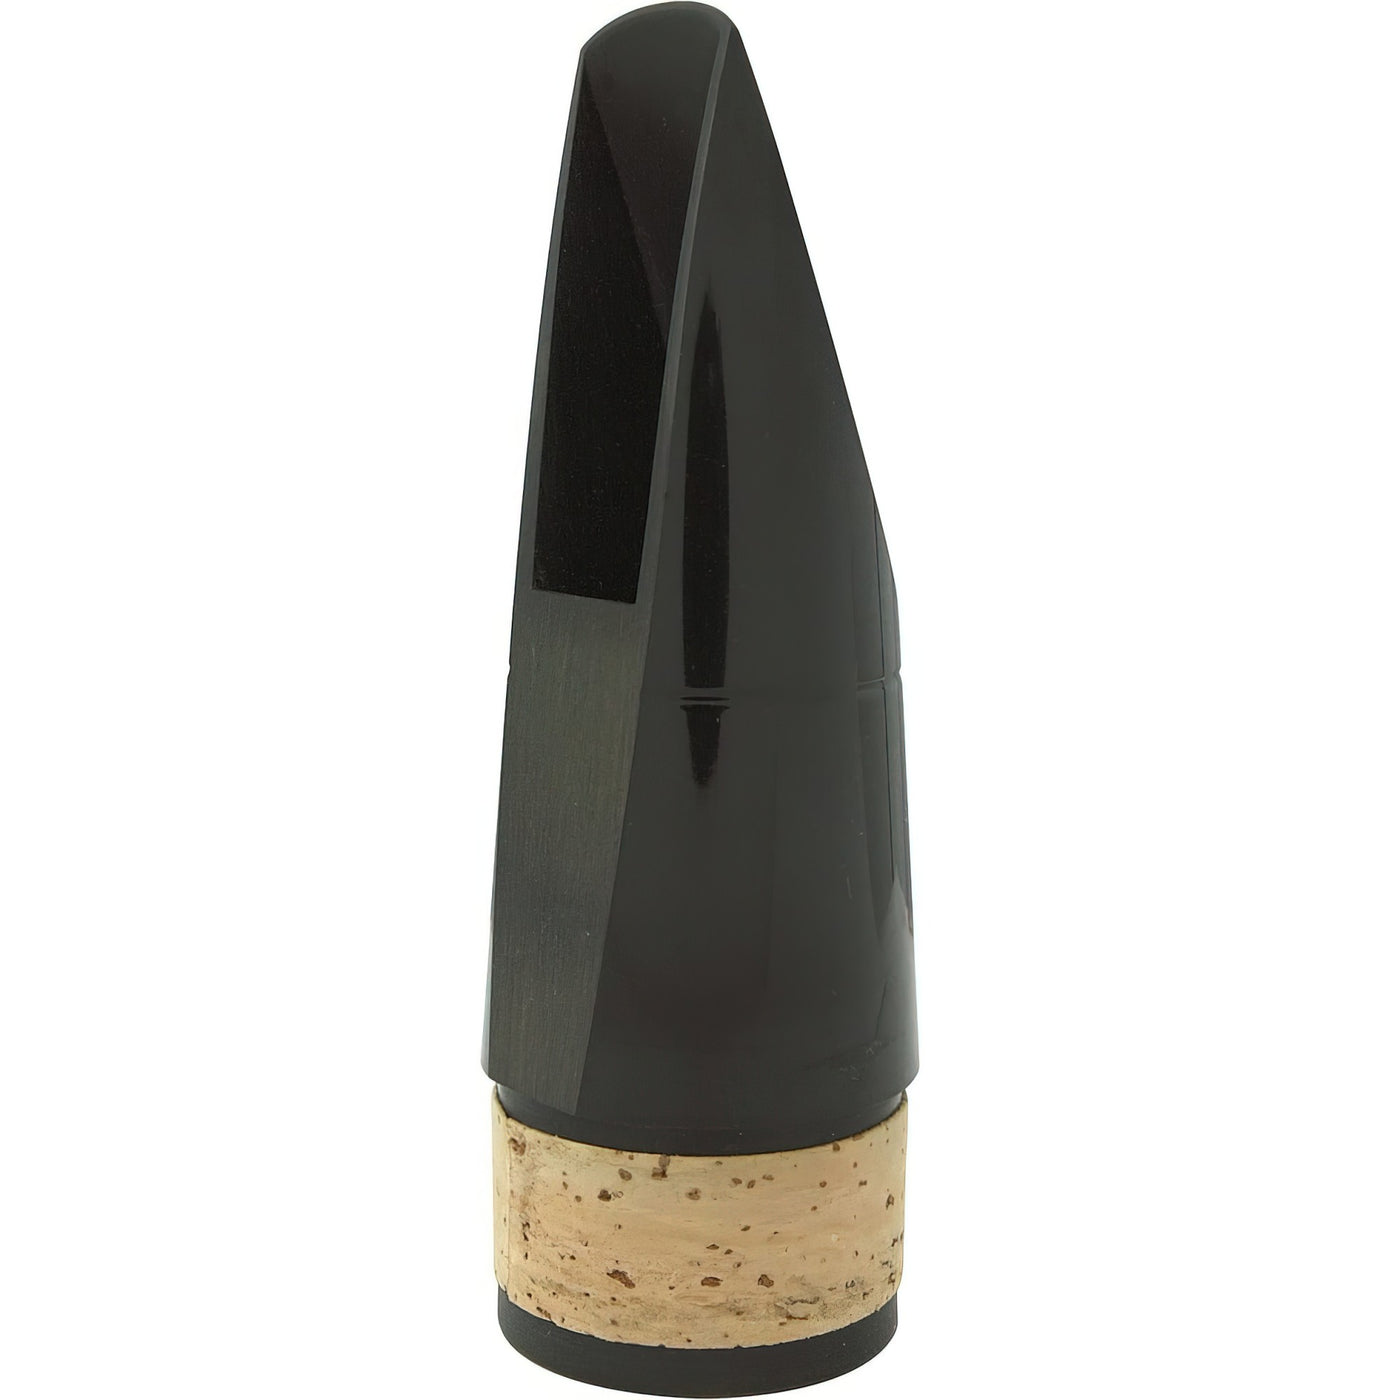 Selmer Paris Standard Series Contrabass Clarinet Mouthpiece, C* (205C1)